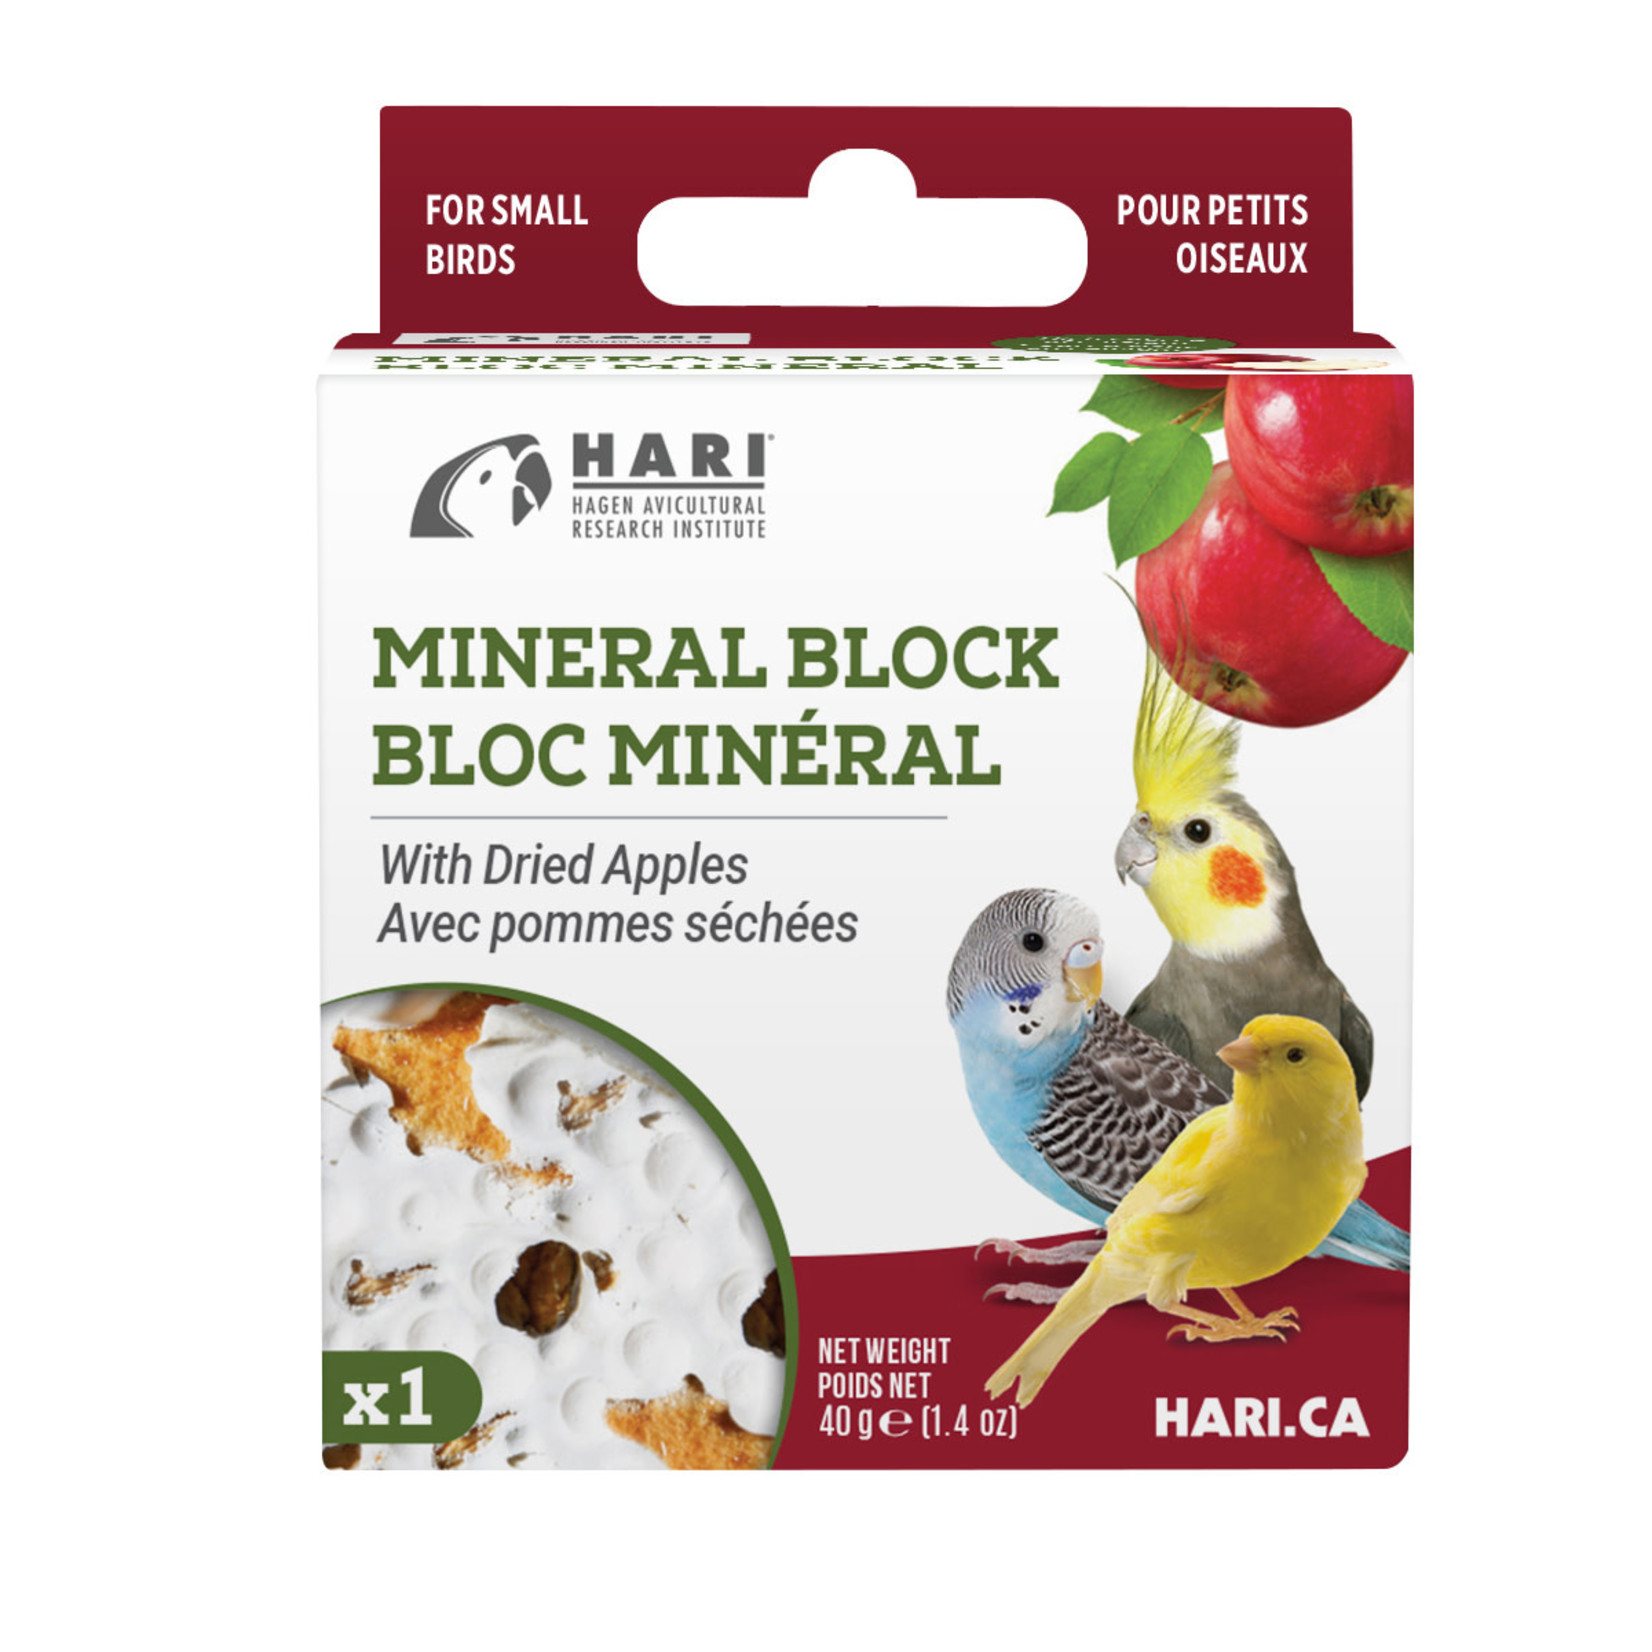 HARI HARI Mineral Block for Small Birds - Dried Apple - 40 g - 1 pack